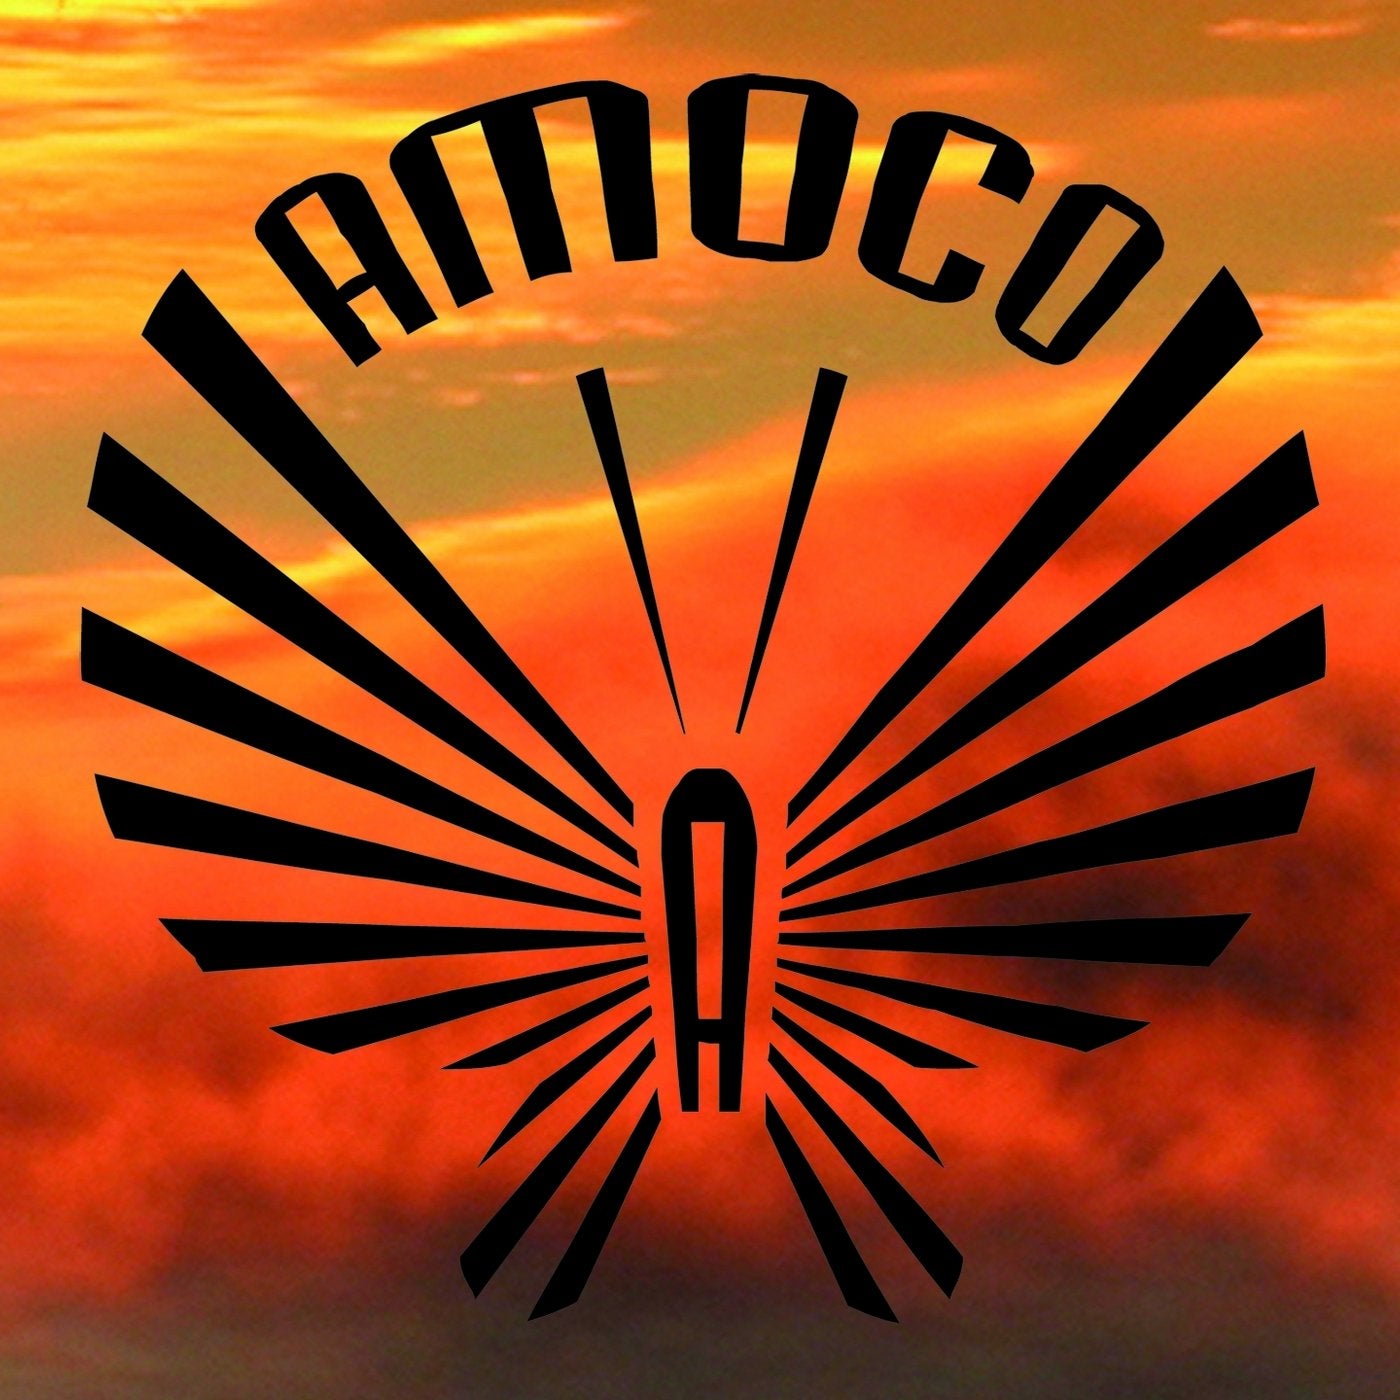 Amoco, Vol. 1 (Best of: 92 / 01)